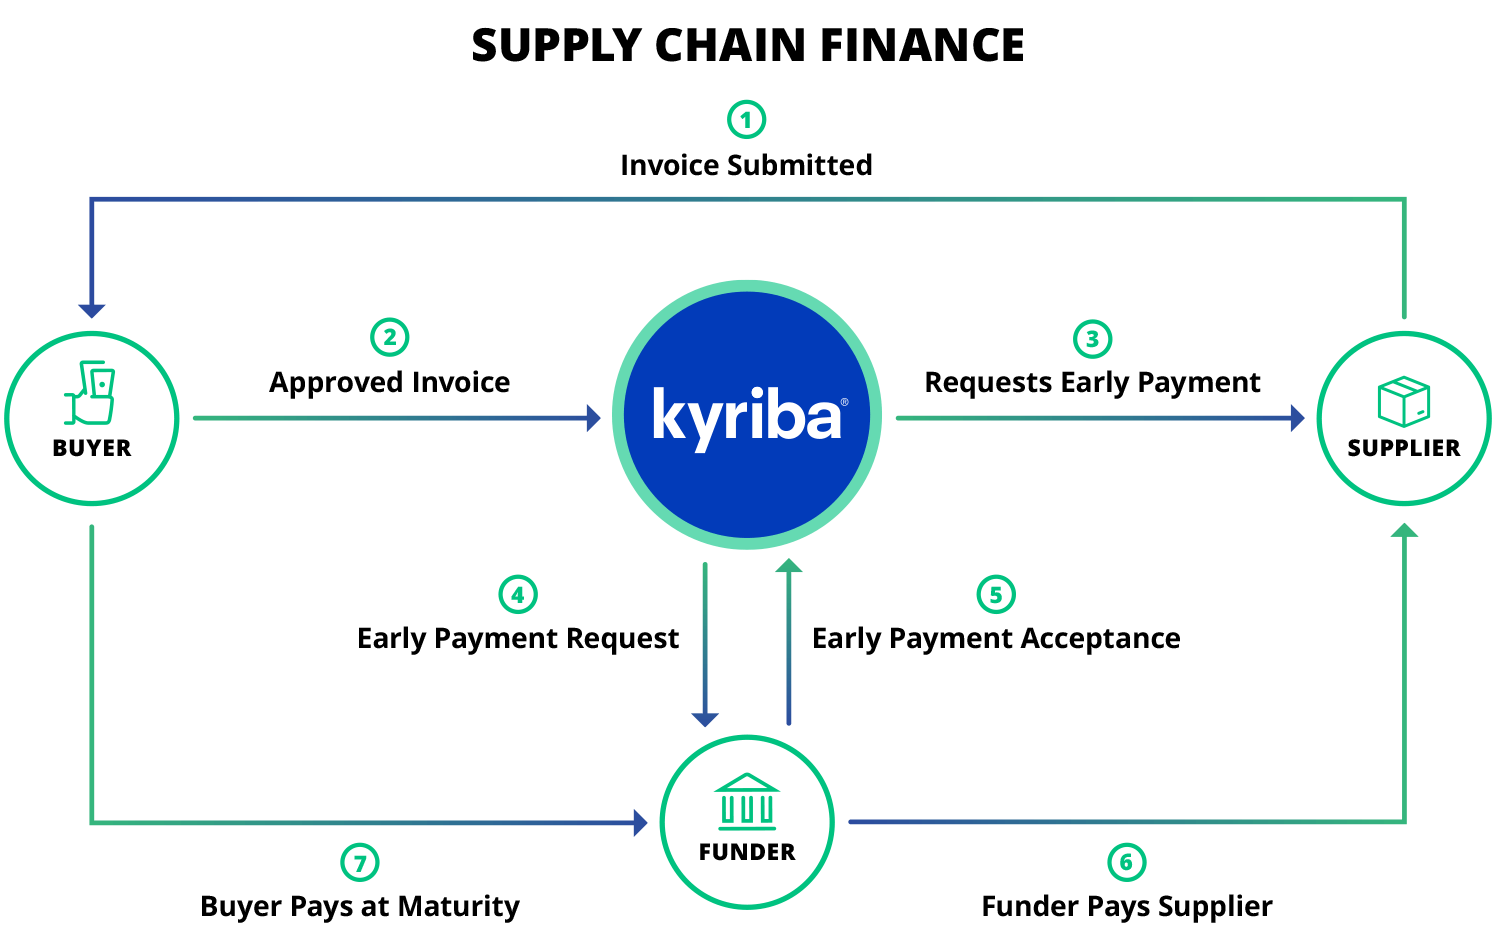 Diagramme de Supply Chain Finance